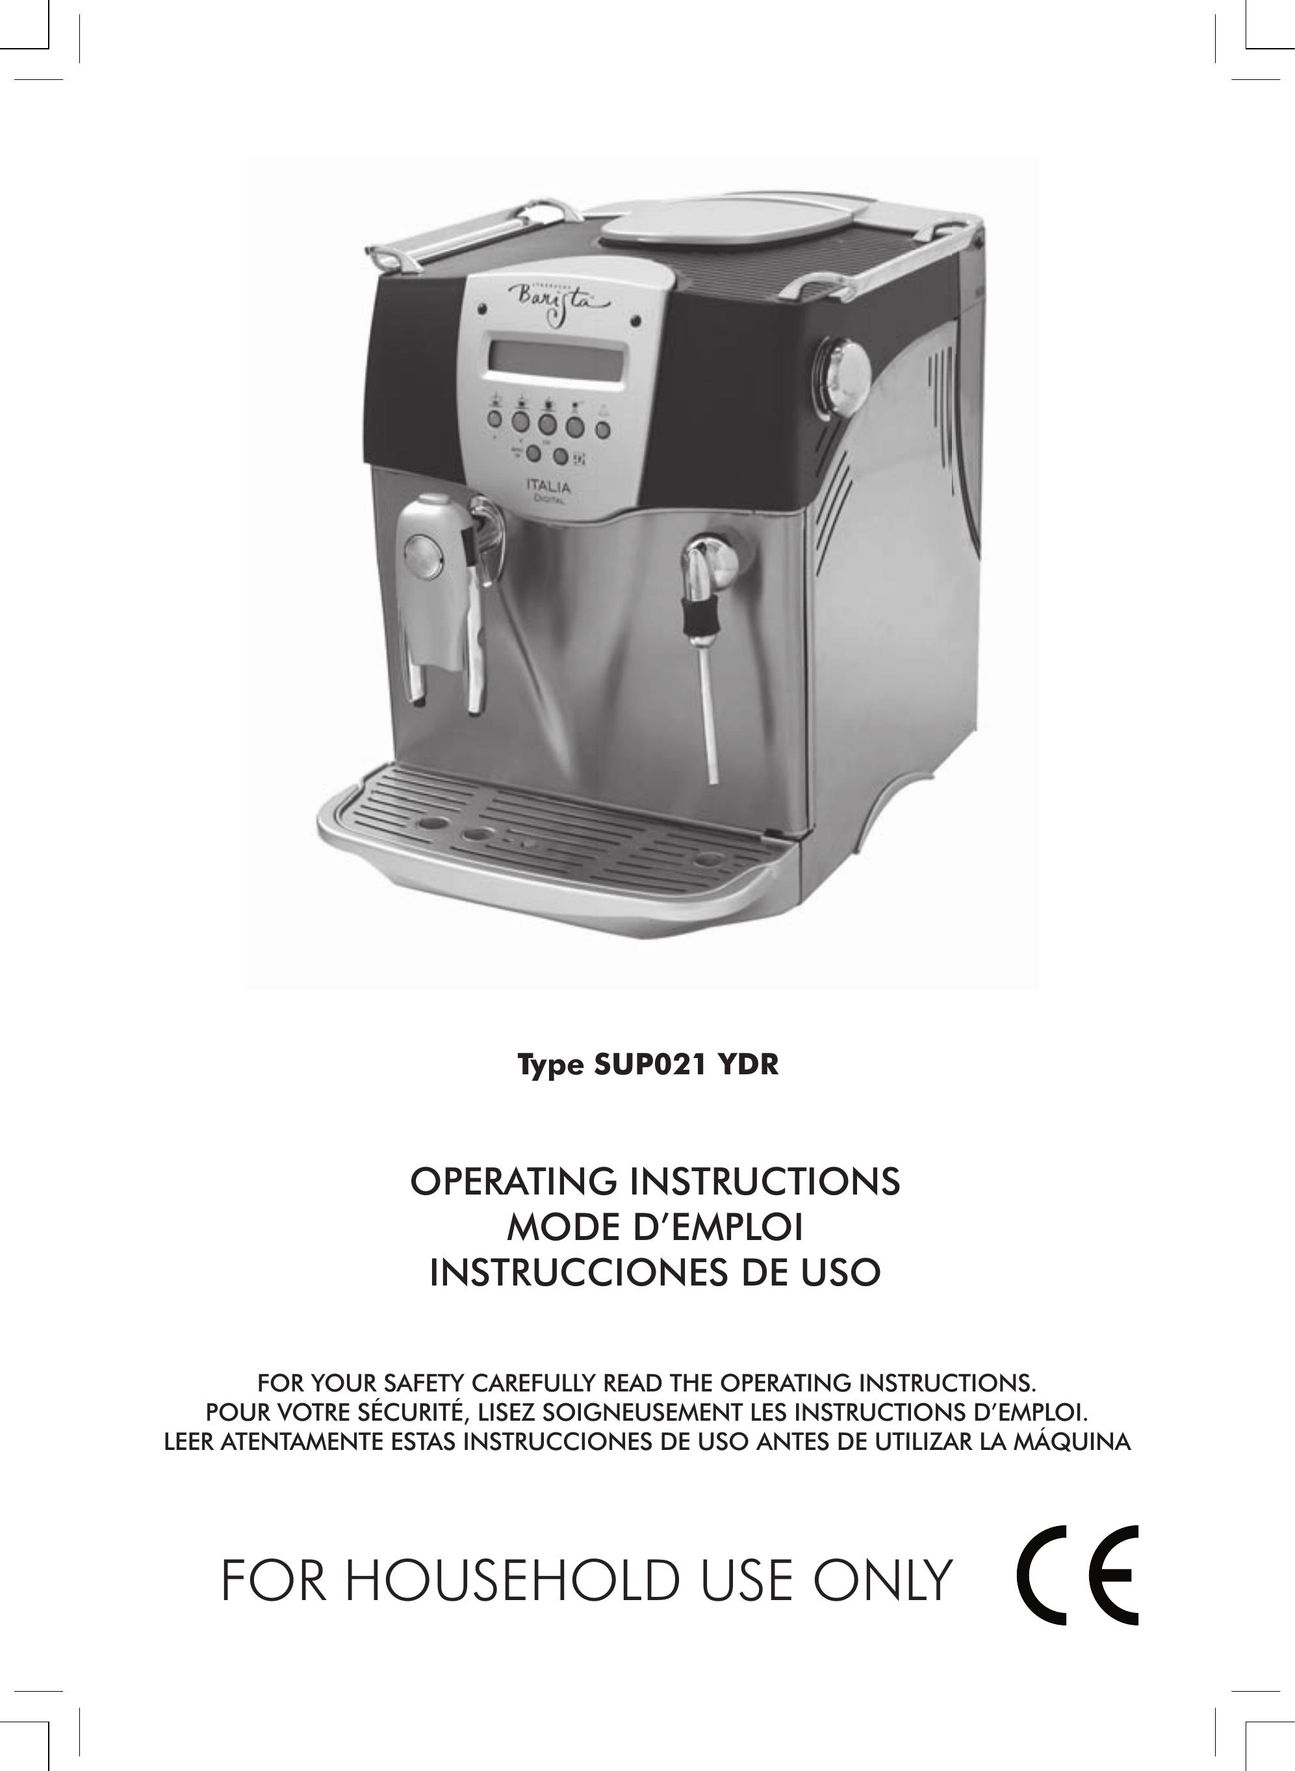 Starbucks Barista SUP021 YDR Espresso Maker User Manual